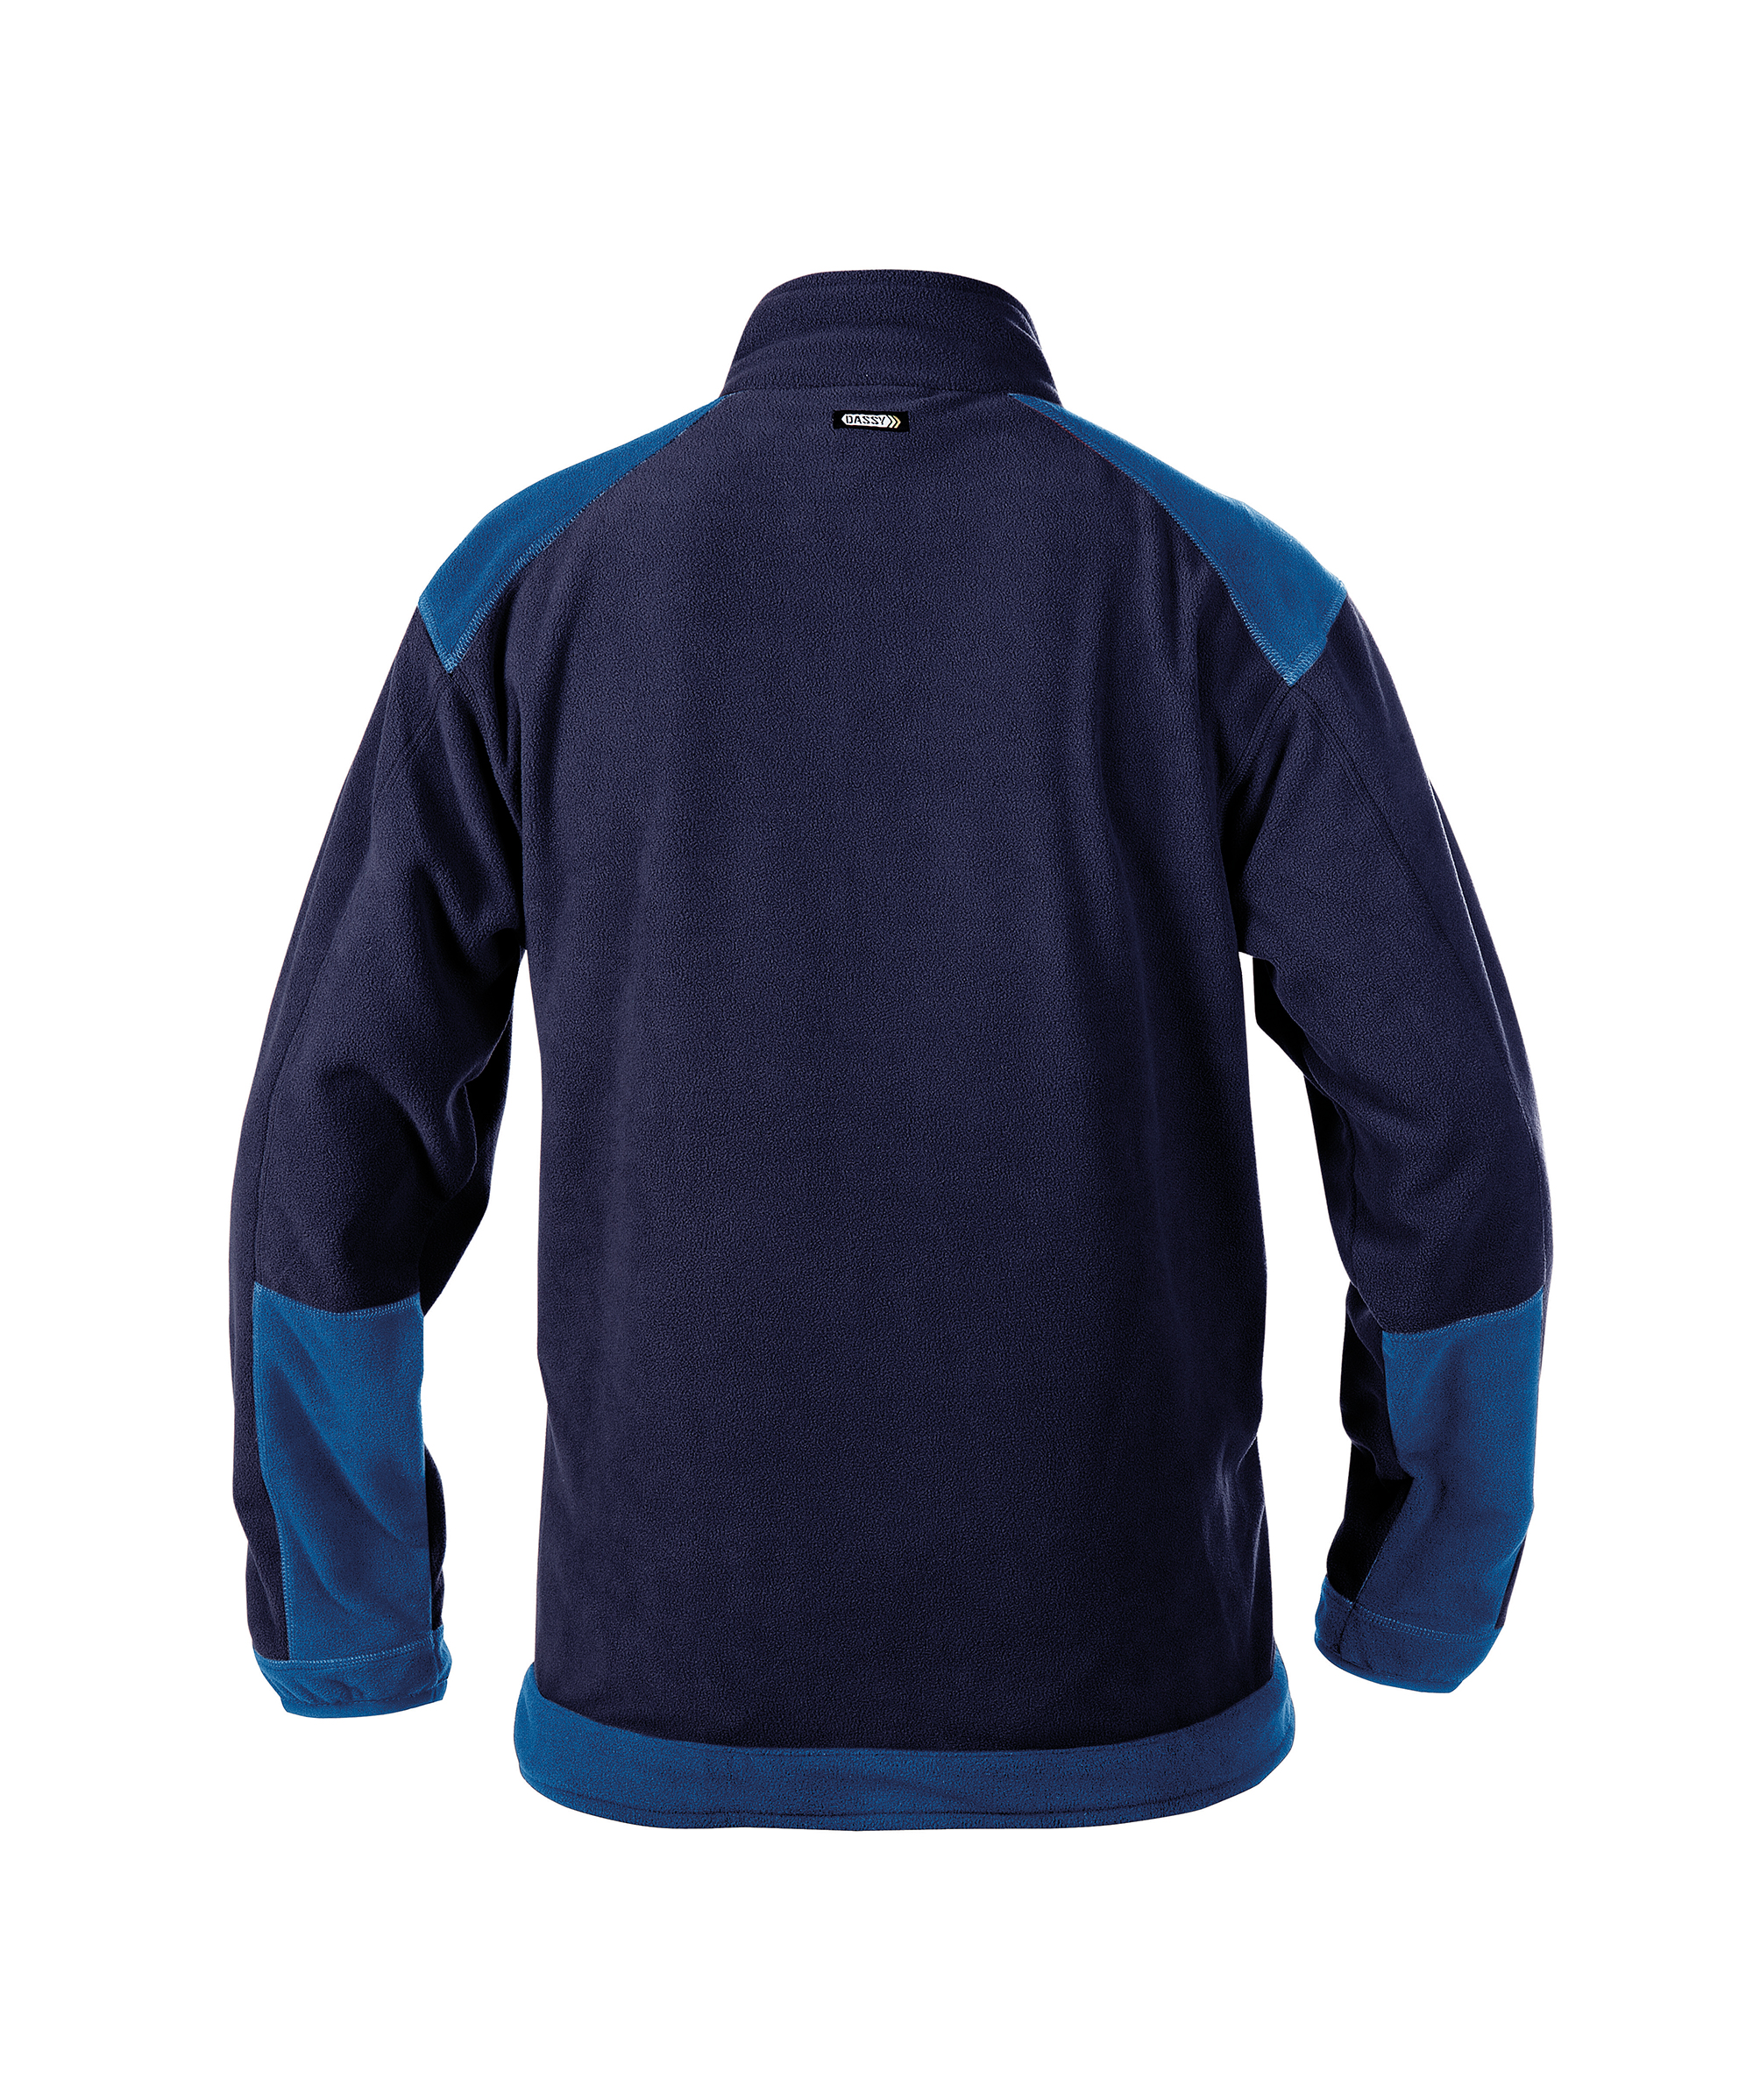 kazan_two-tone-fleece-jacket_navy-royal-blue_back.jpg